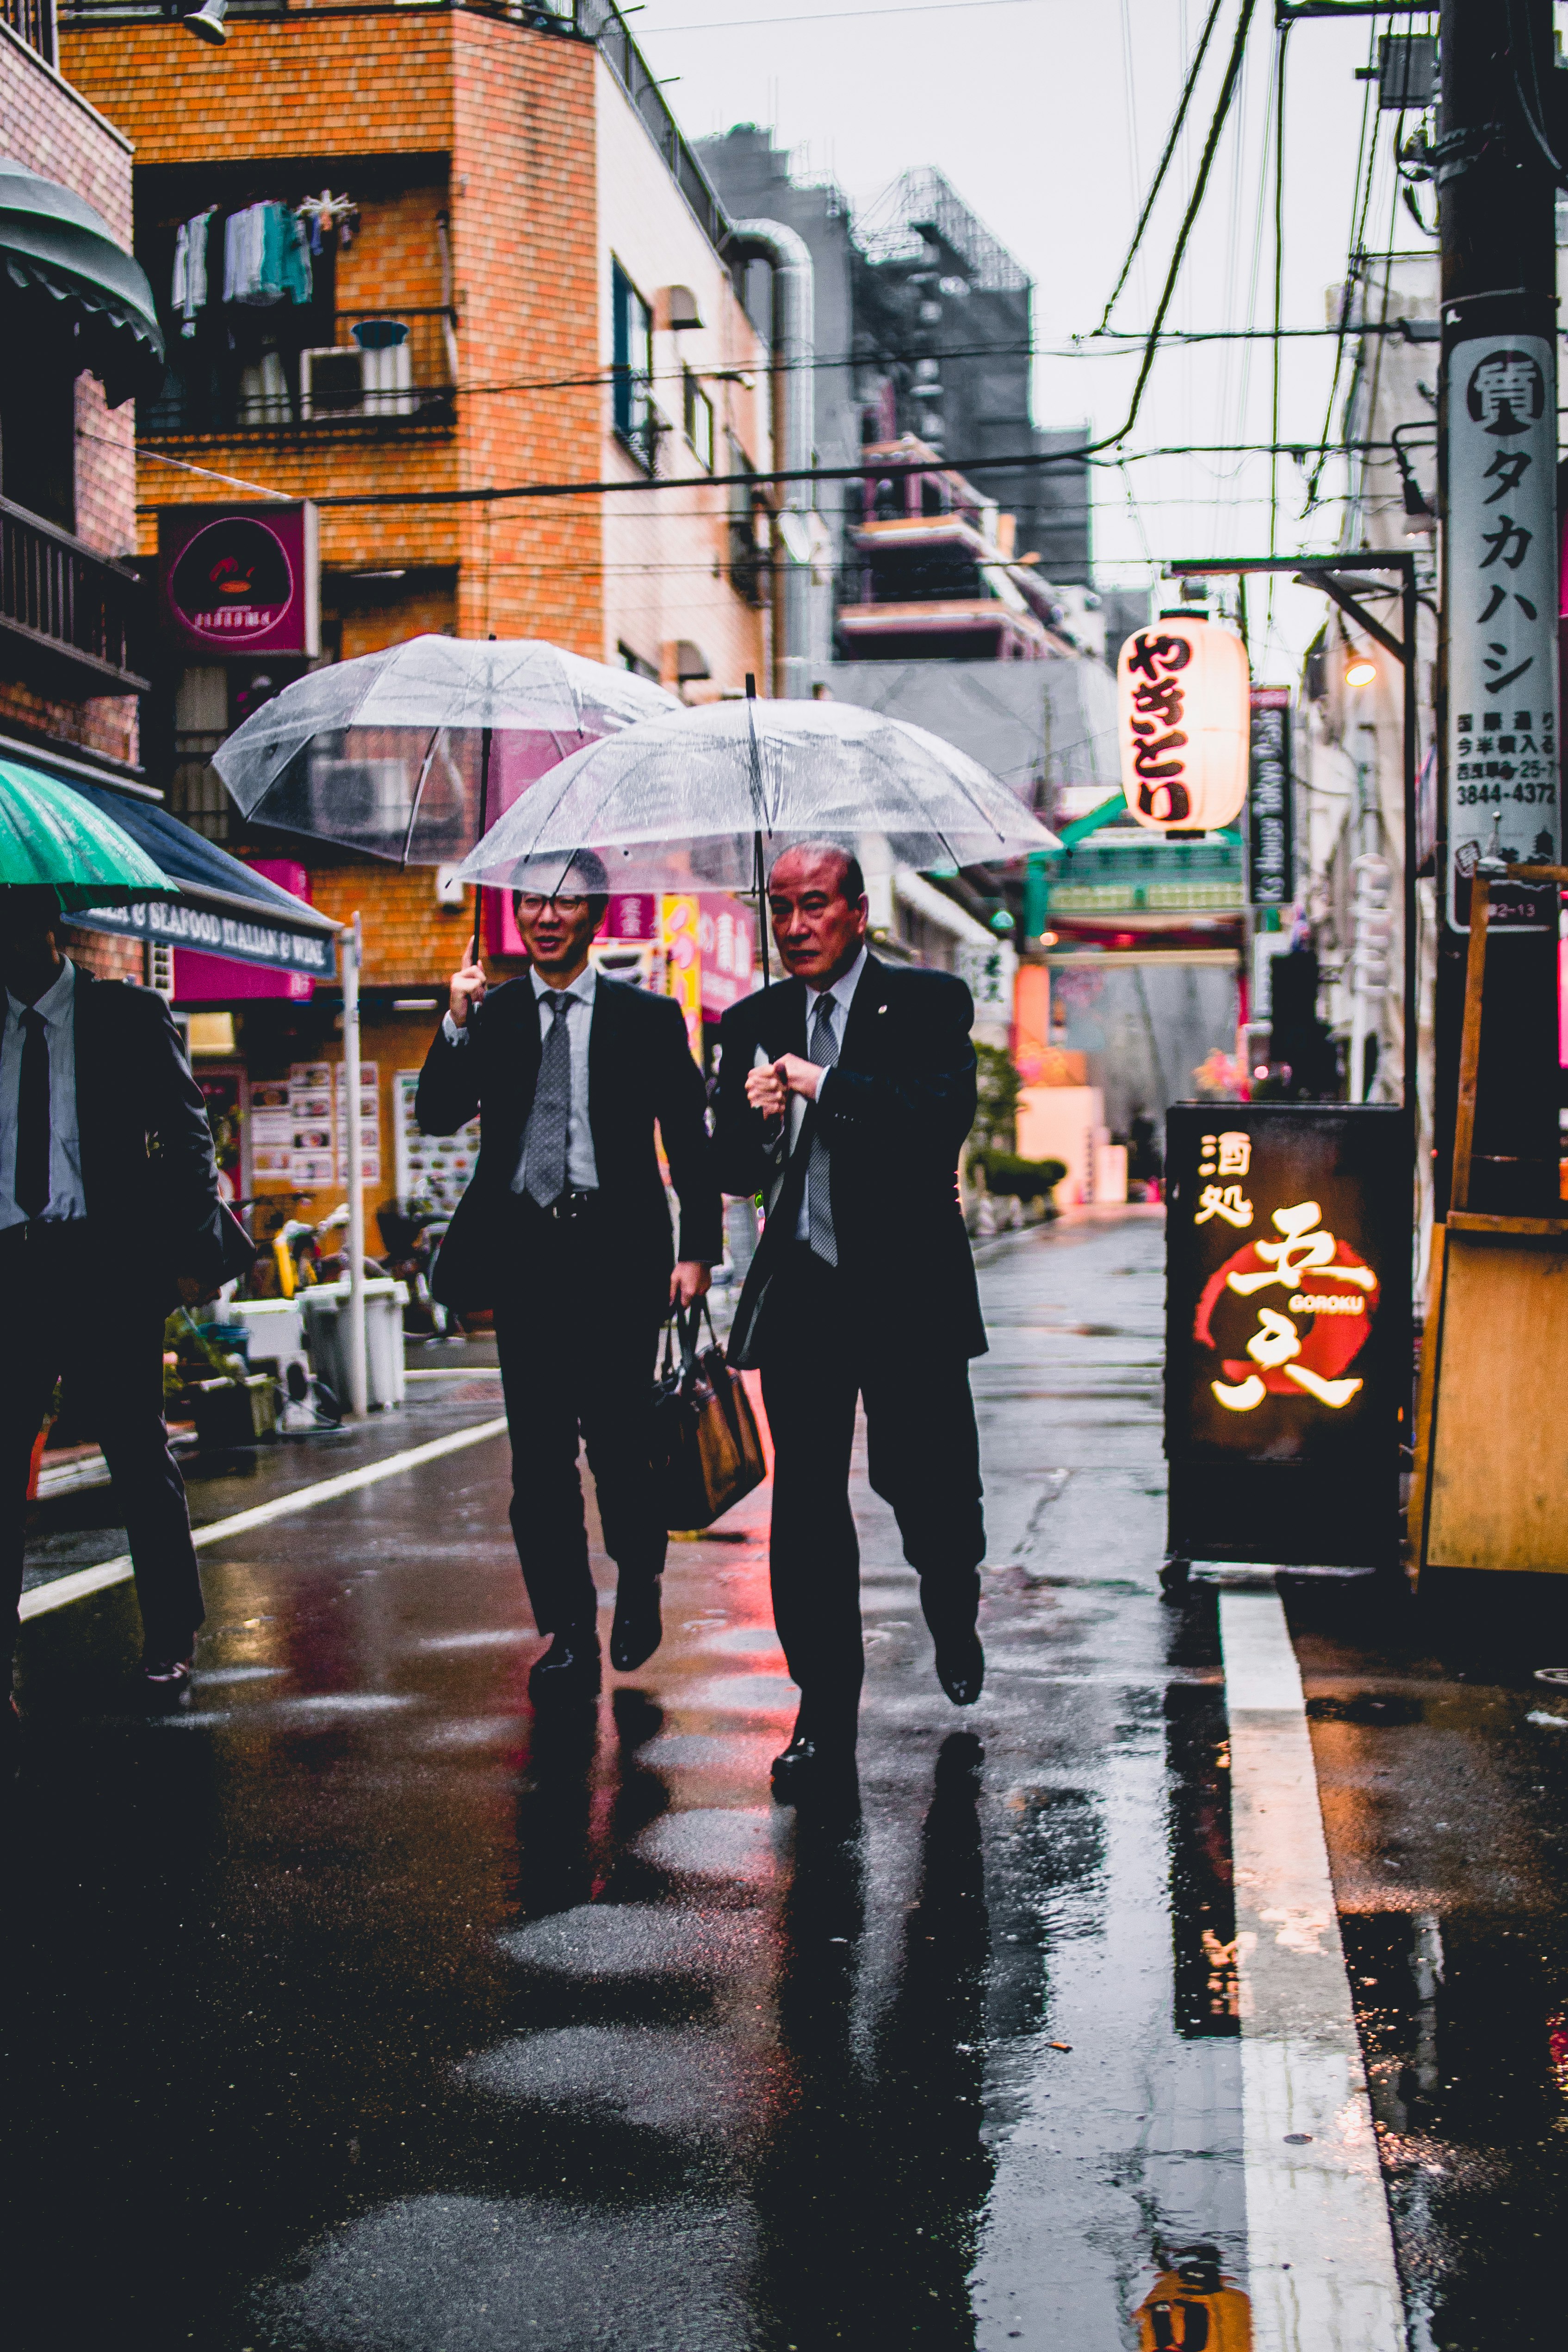 two men in black suit holding transparent umbrellas walking in the street